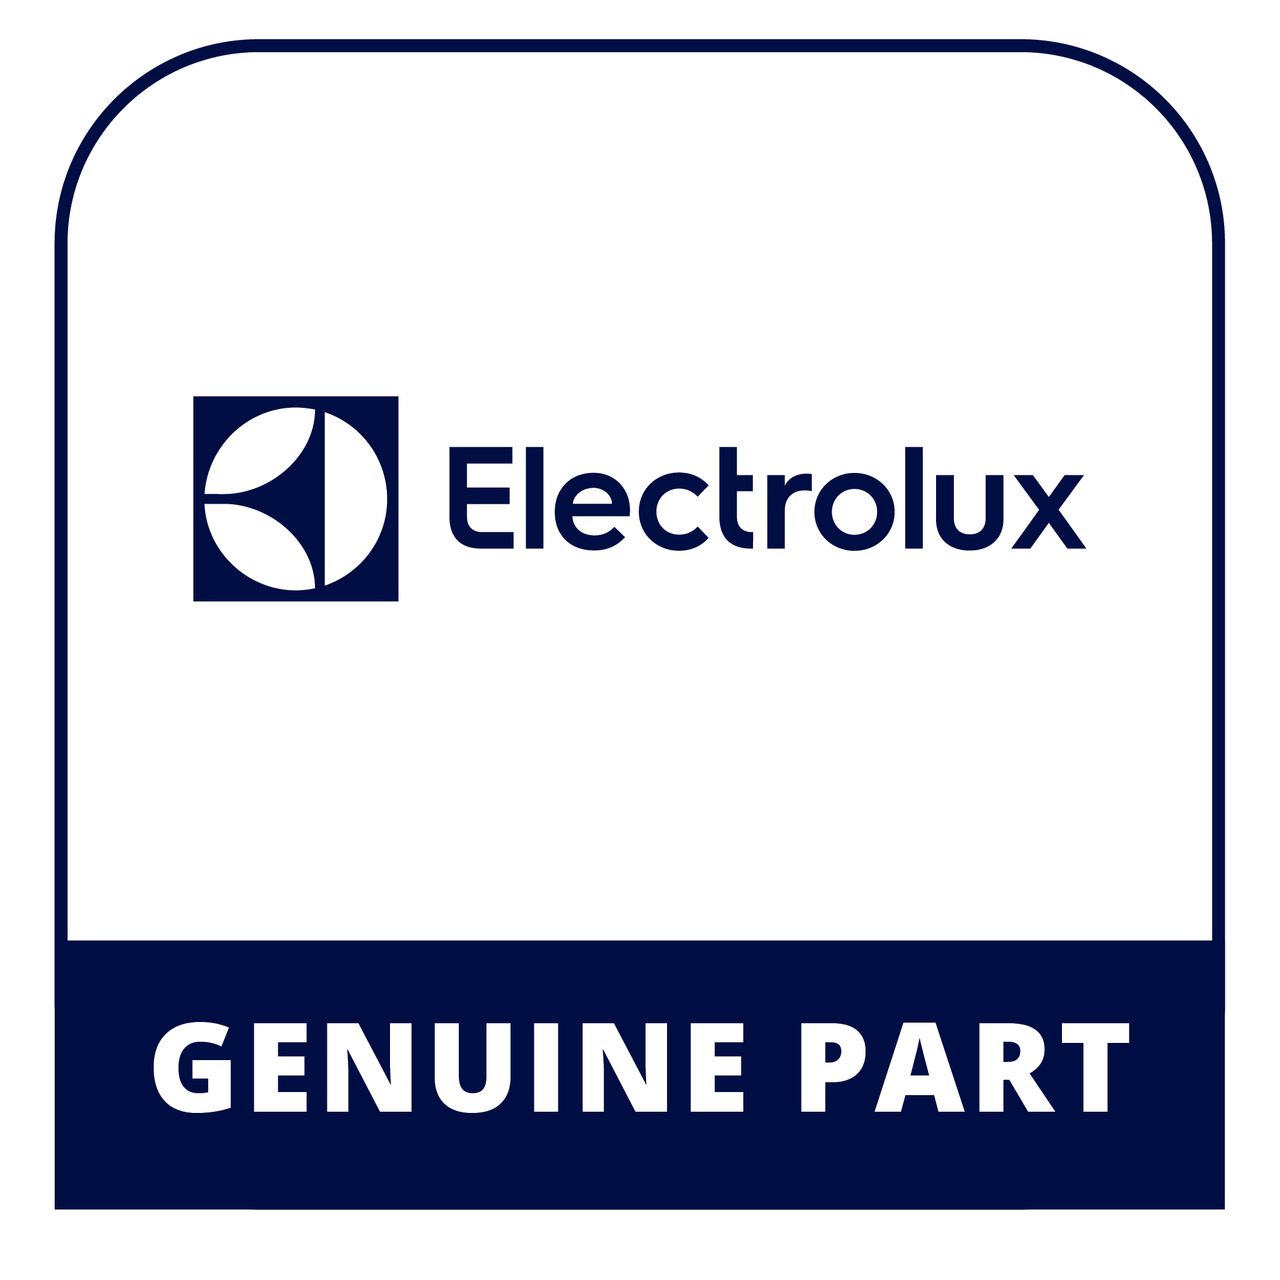 Frigidaire - Electrolux 5304501907 Knob - Genuine Electrolux Part